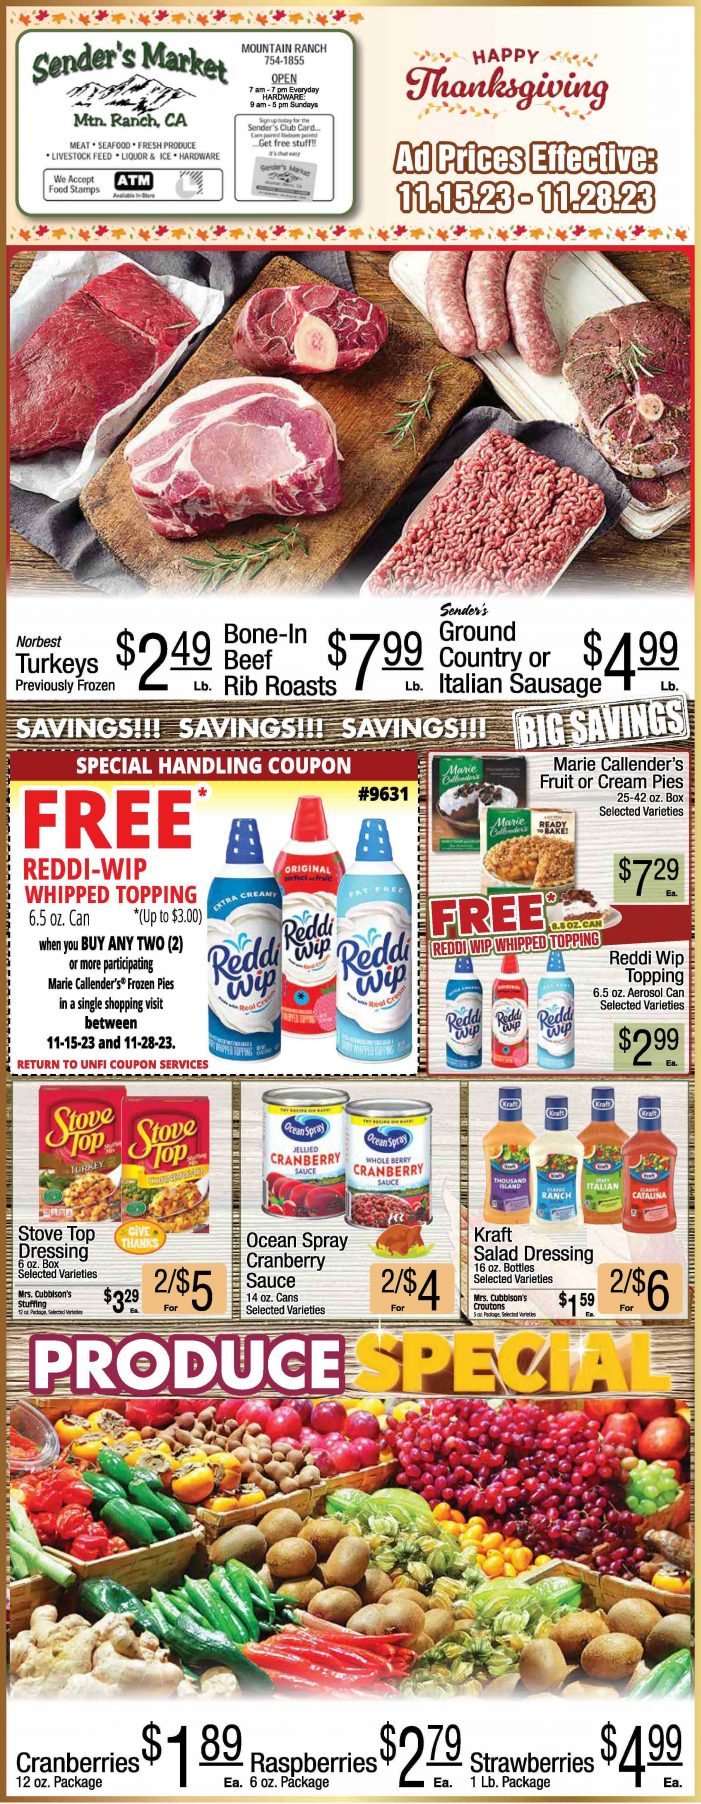 Sender’s Market Big Thanksgiving Ad & Grocery Specials Through November 28th! Shop Local & Save!!